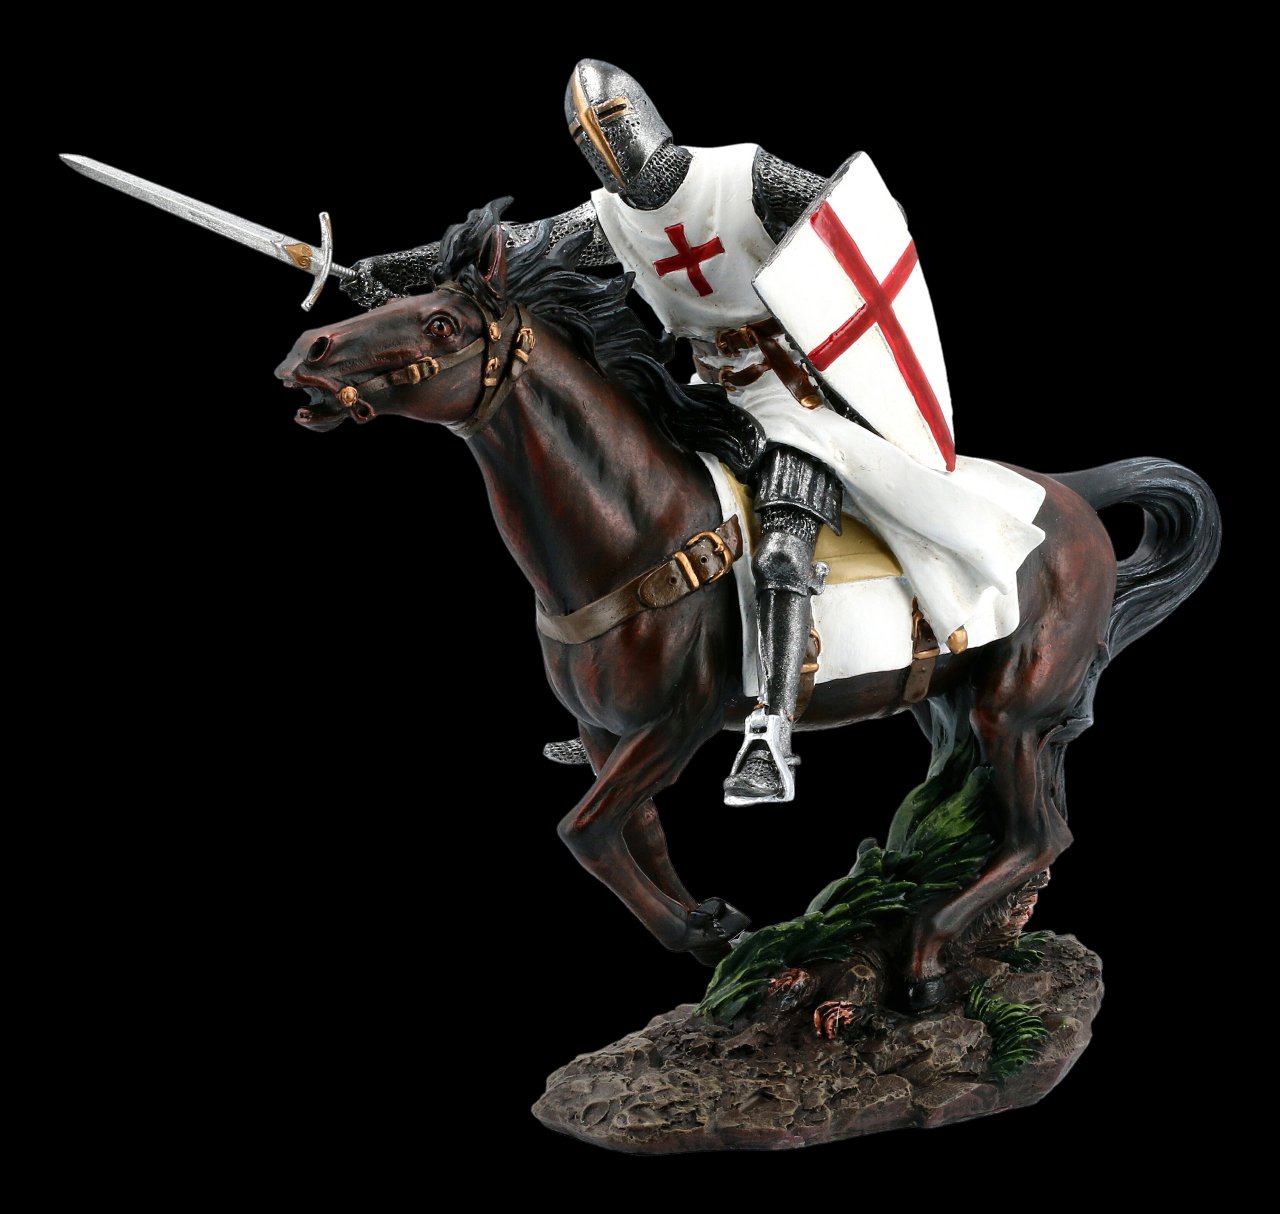 Templar Knight Figurine on Horse with Sword